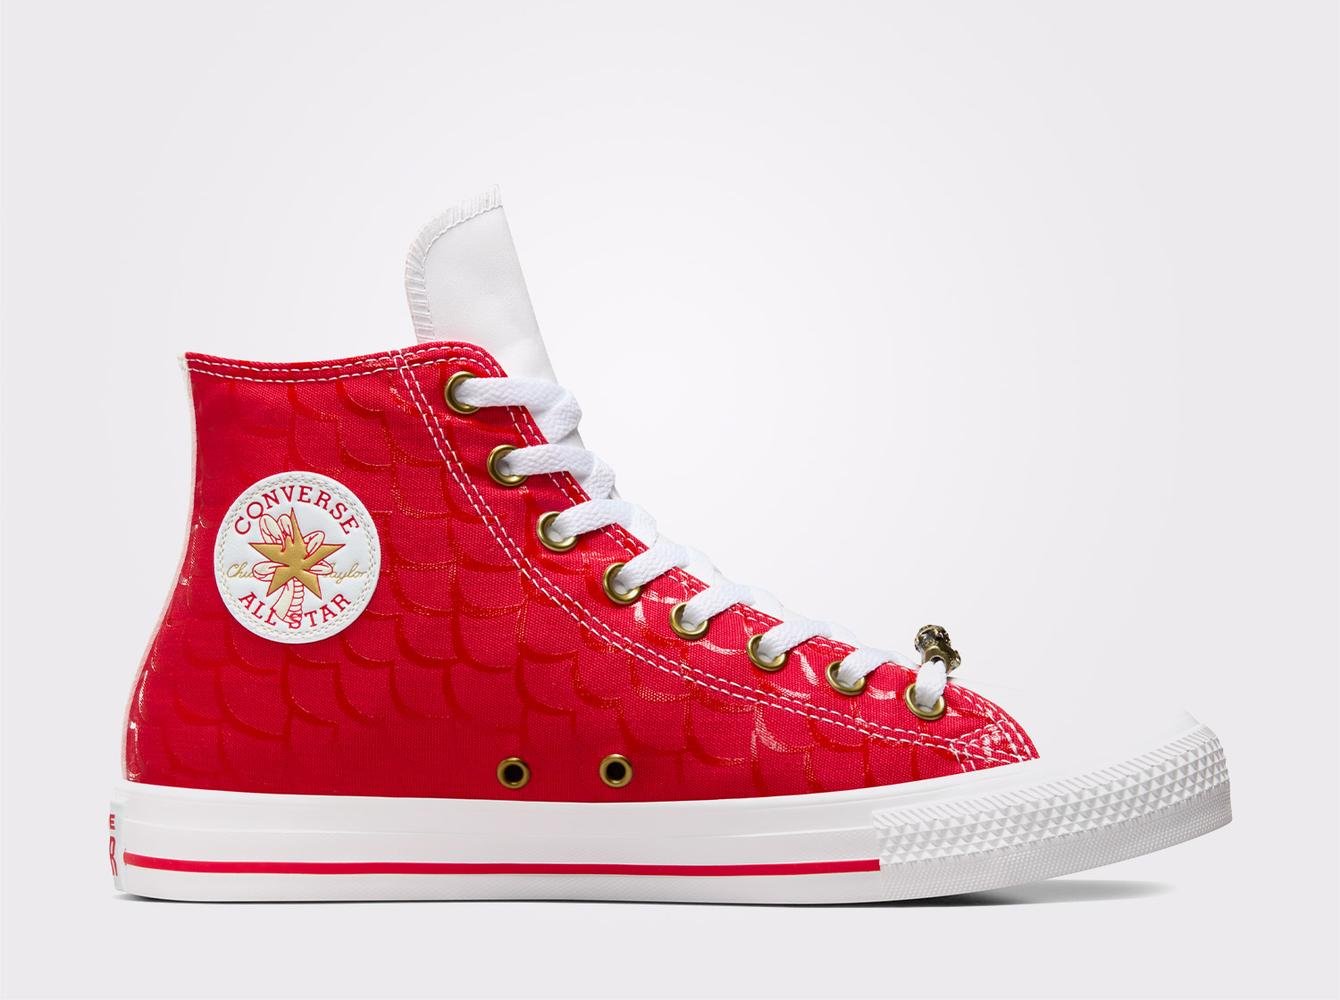 Converse Chuck Taylor All Star Unisex Kırmızı Sneaker